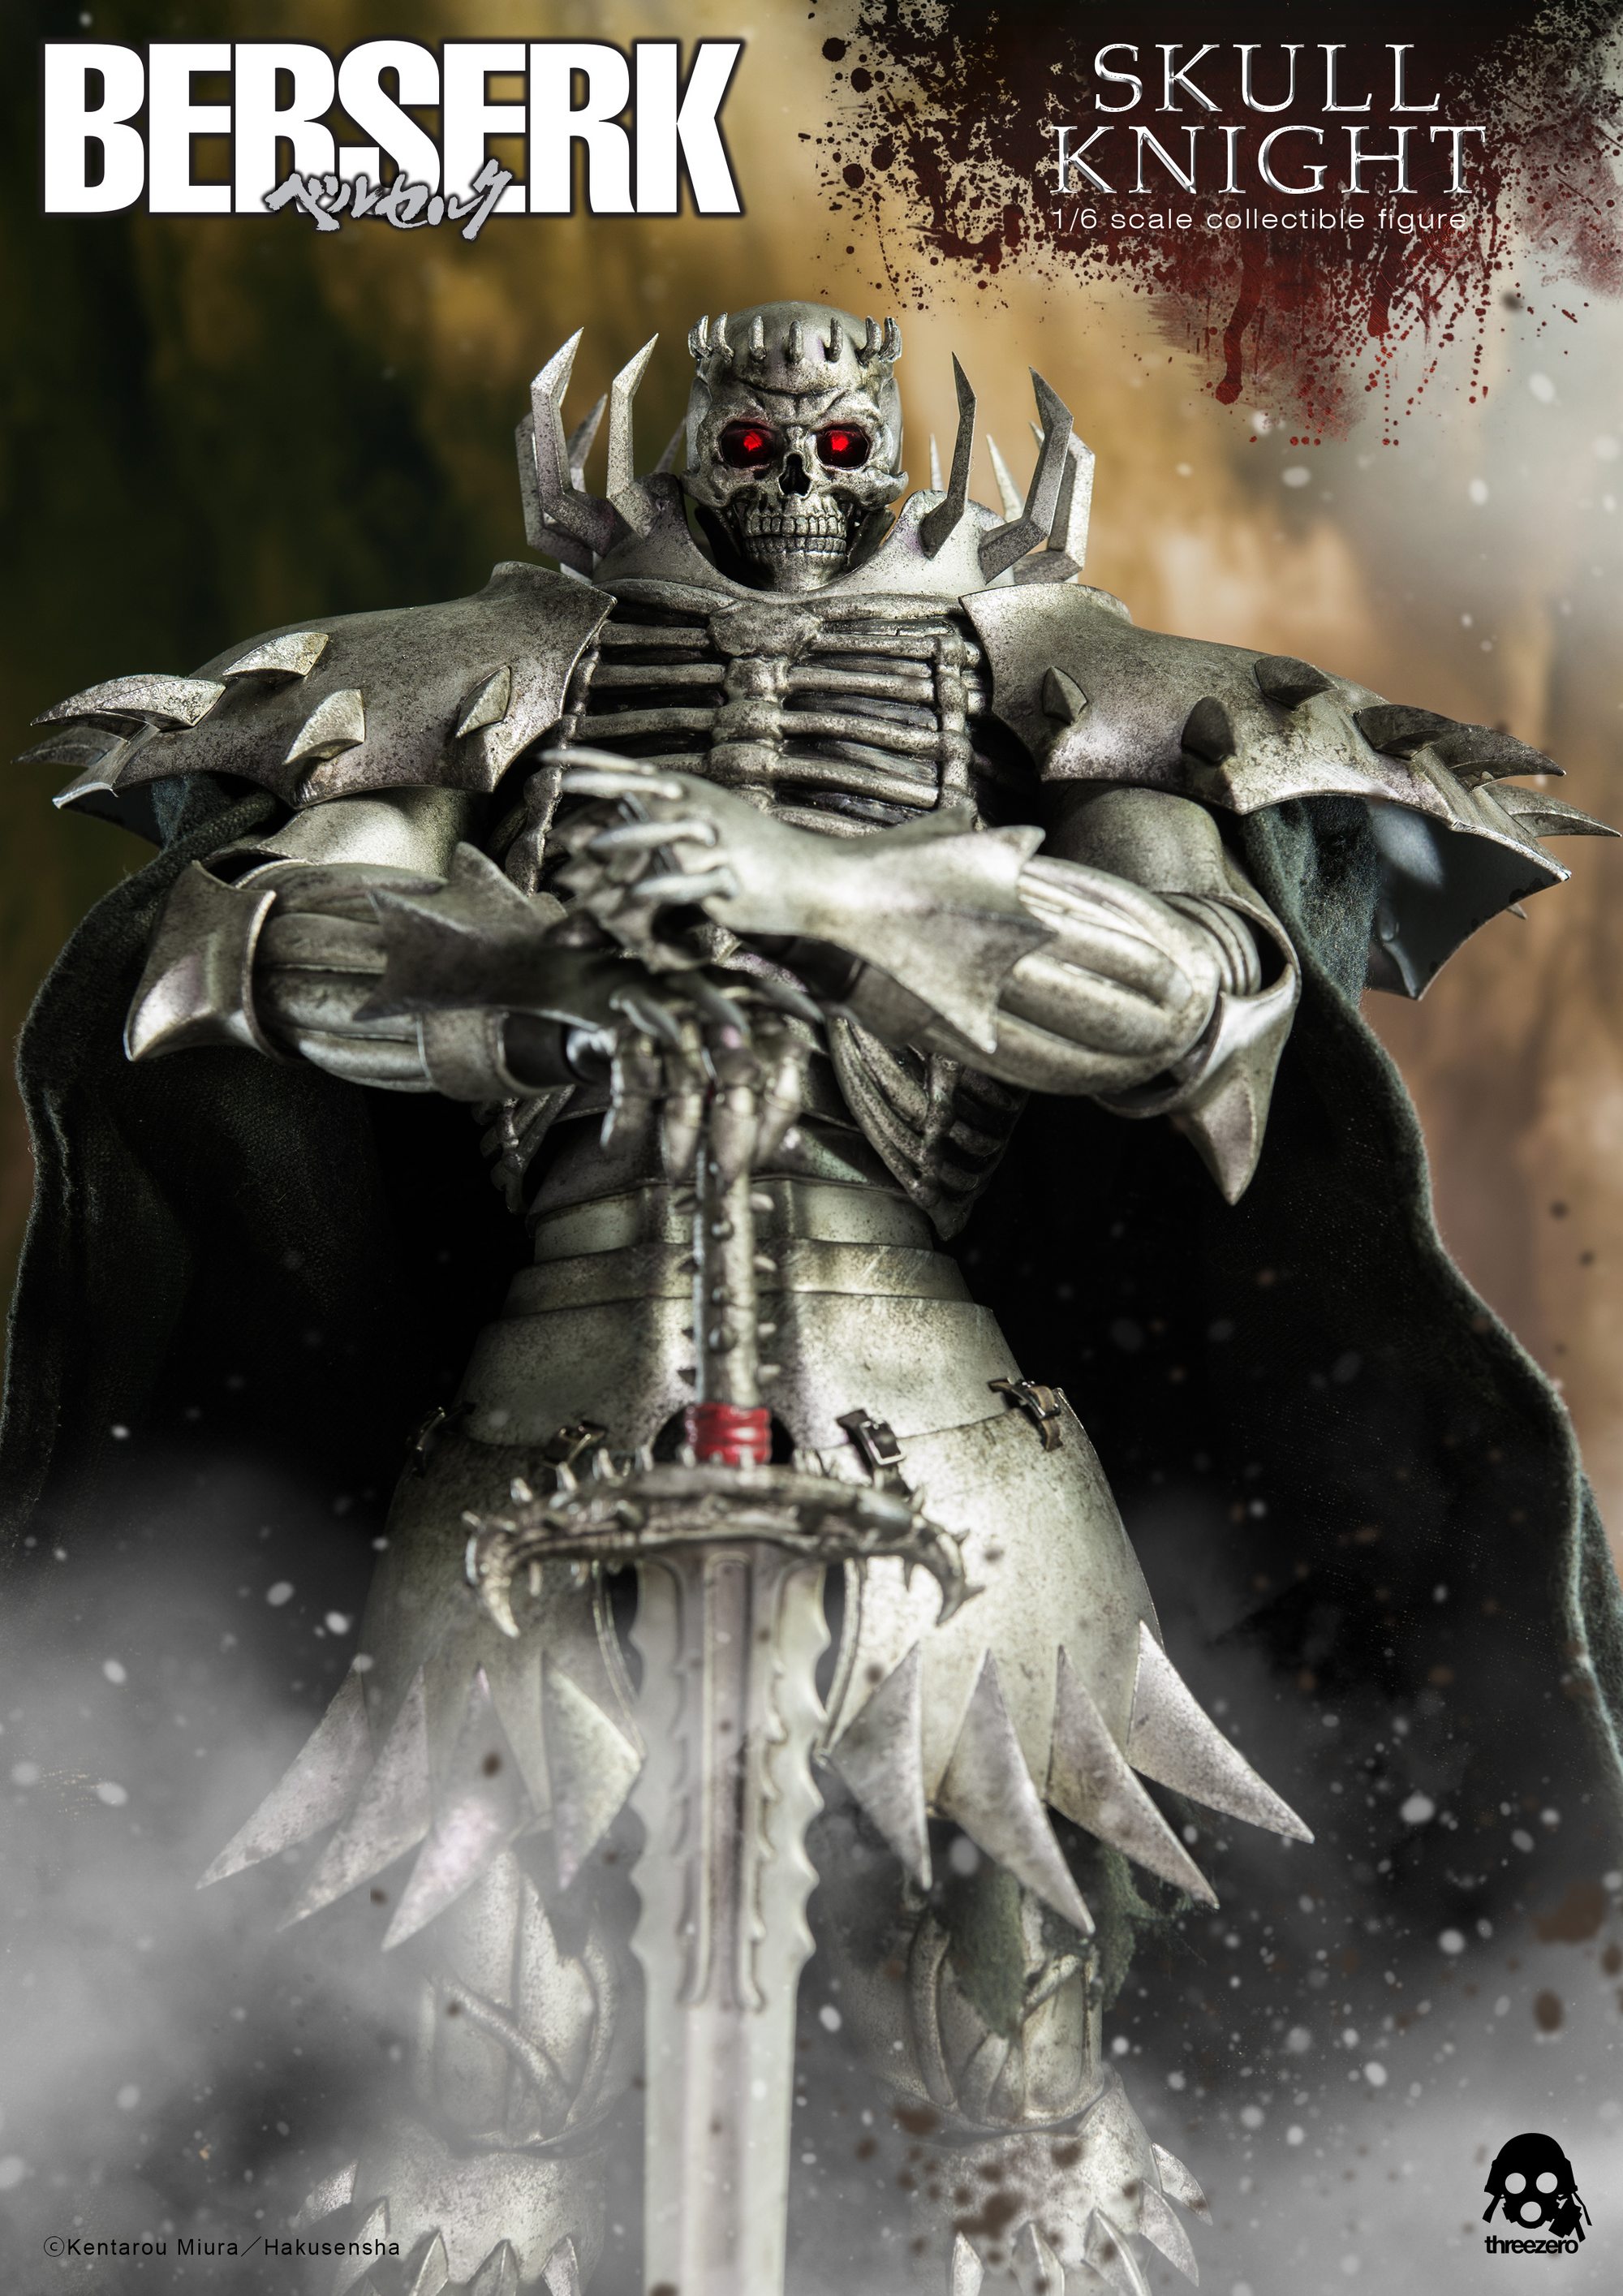 Berserk Skull Knight Exclusive Version 1/6 Scale Figure by Three Zero